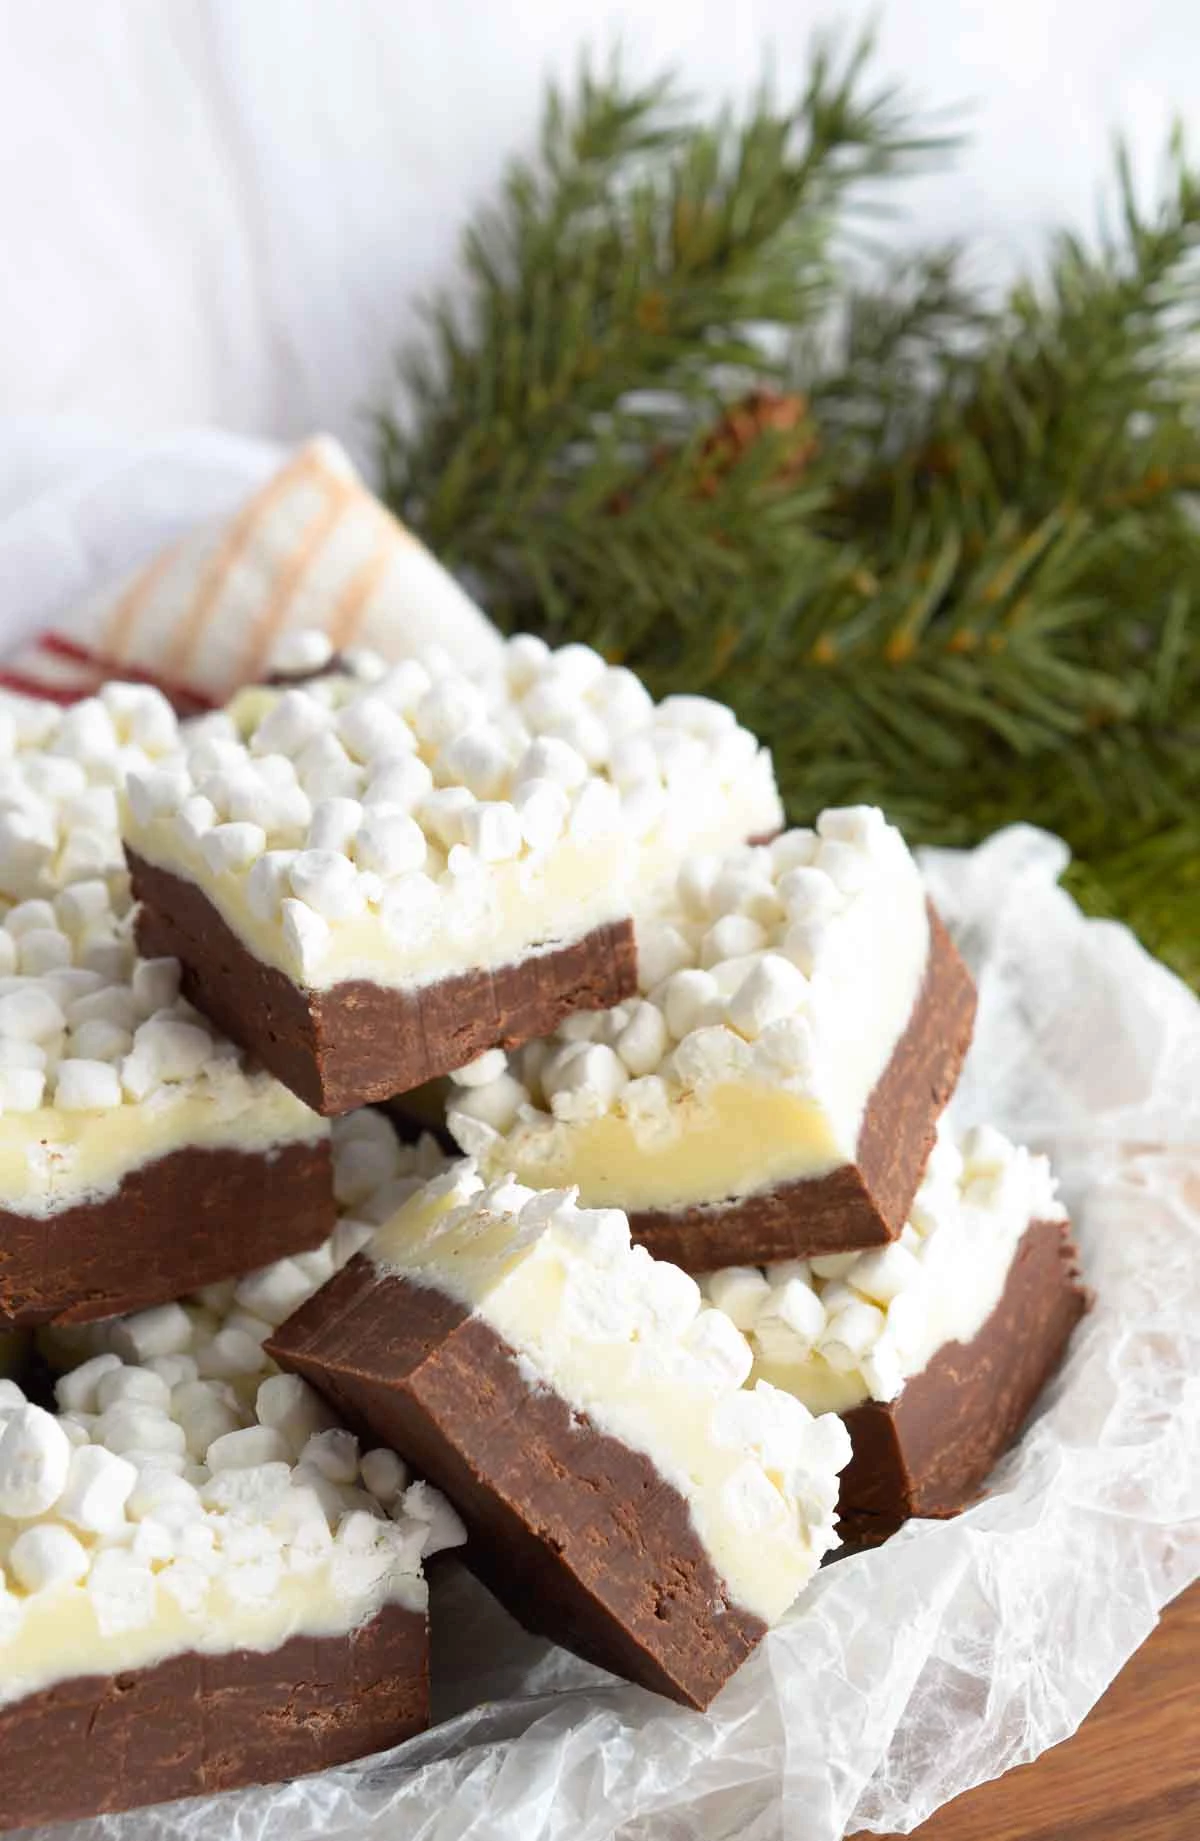 20 Festive Christmas Desserts - Hot Chocolate Fudge